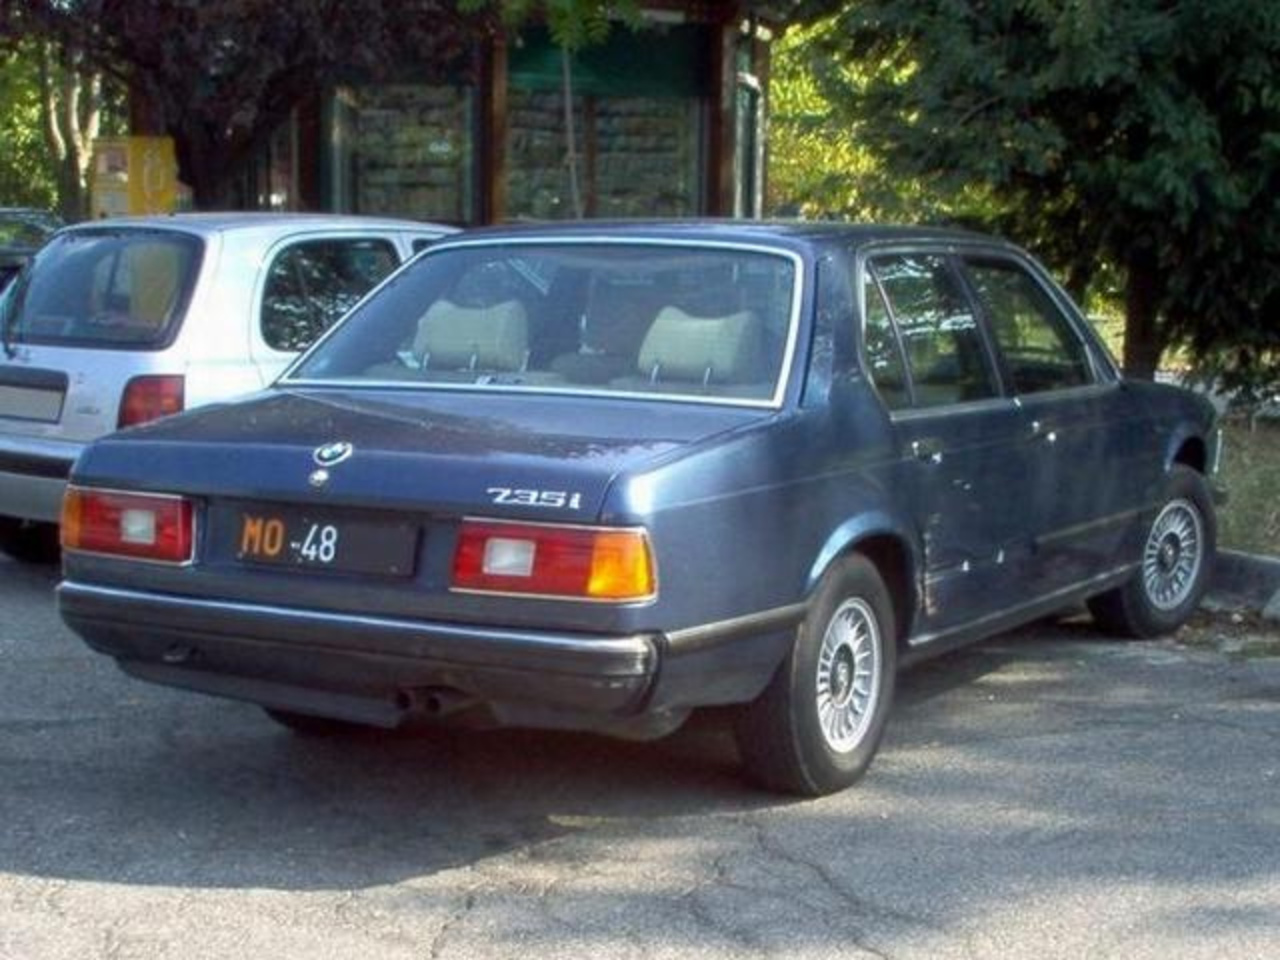 BMW 735i - 1980 | Flickr - Photo Sharing!